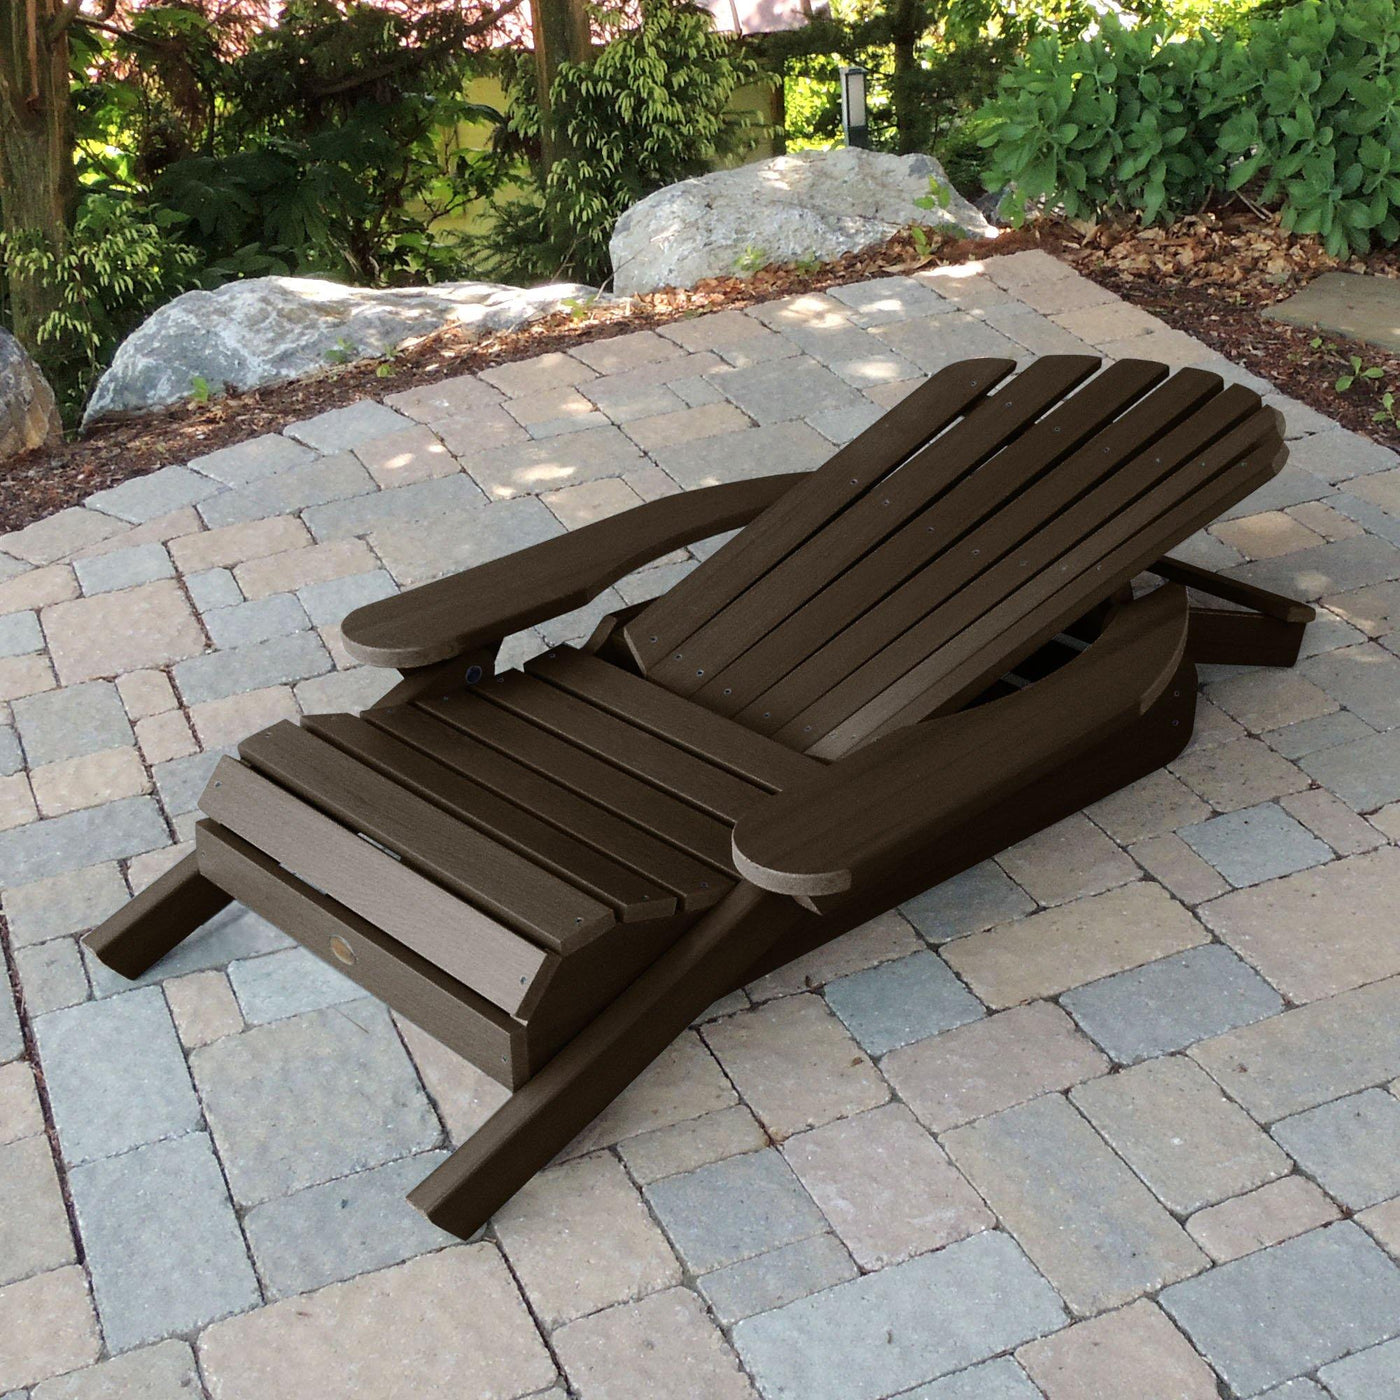 Folded Hamilton Adirondack chair in Weathered Acorn brown on stone